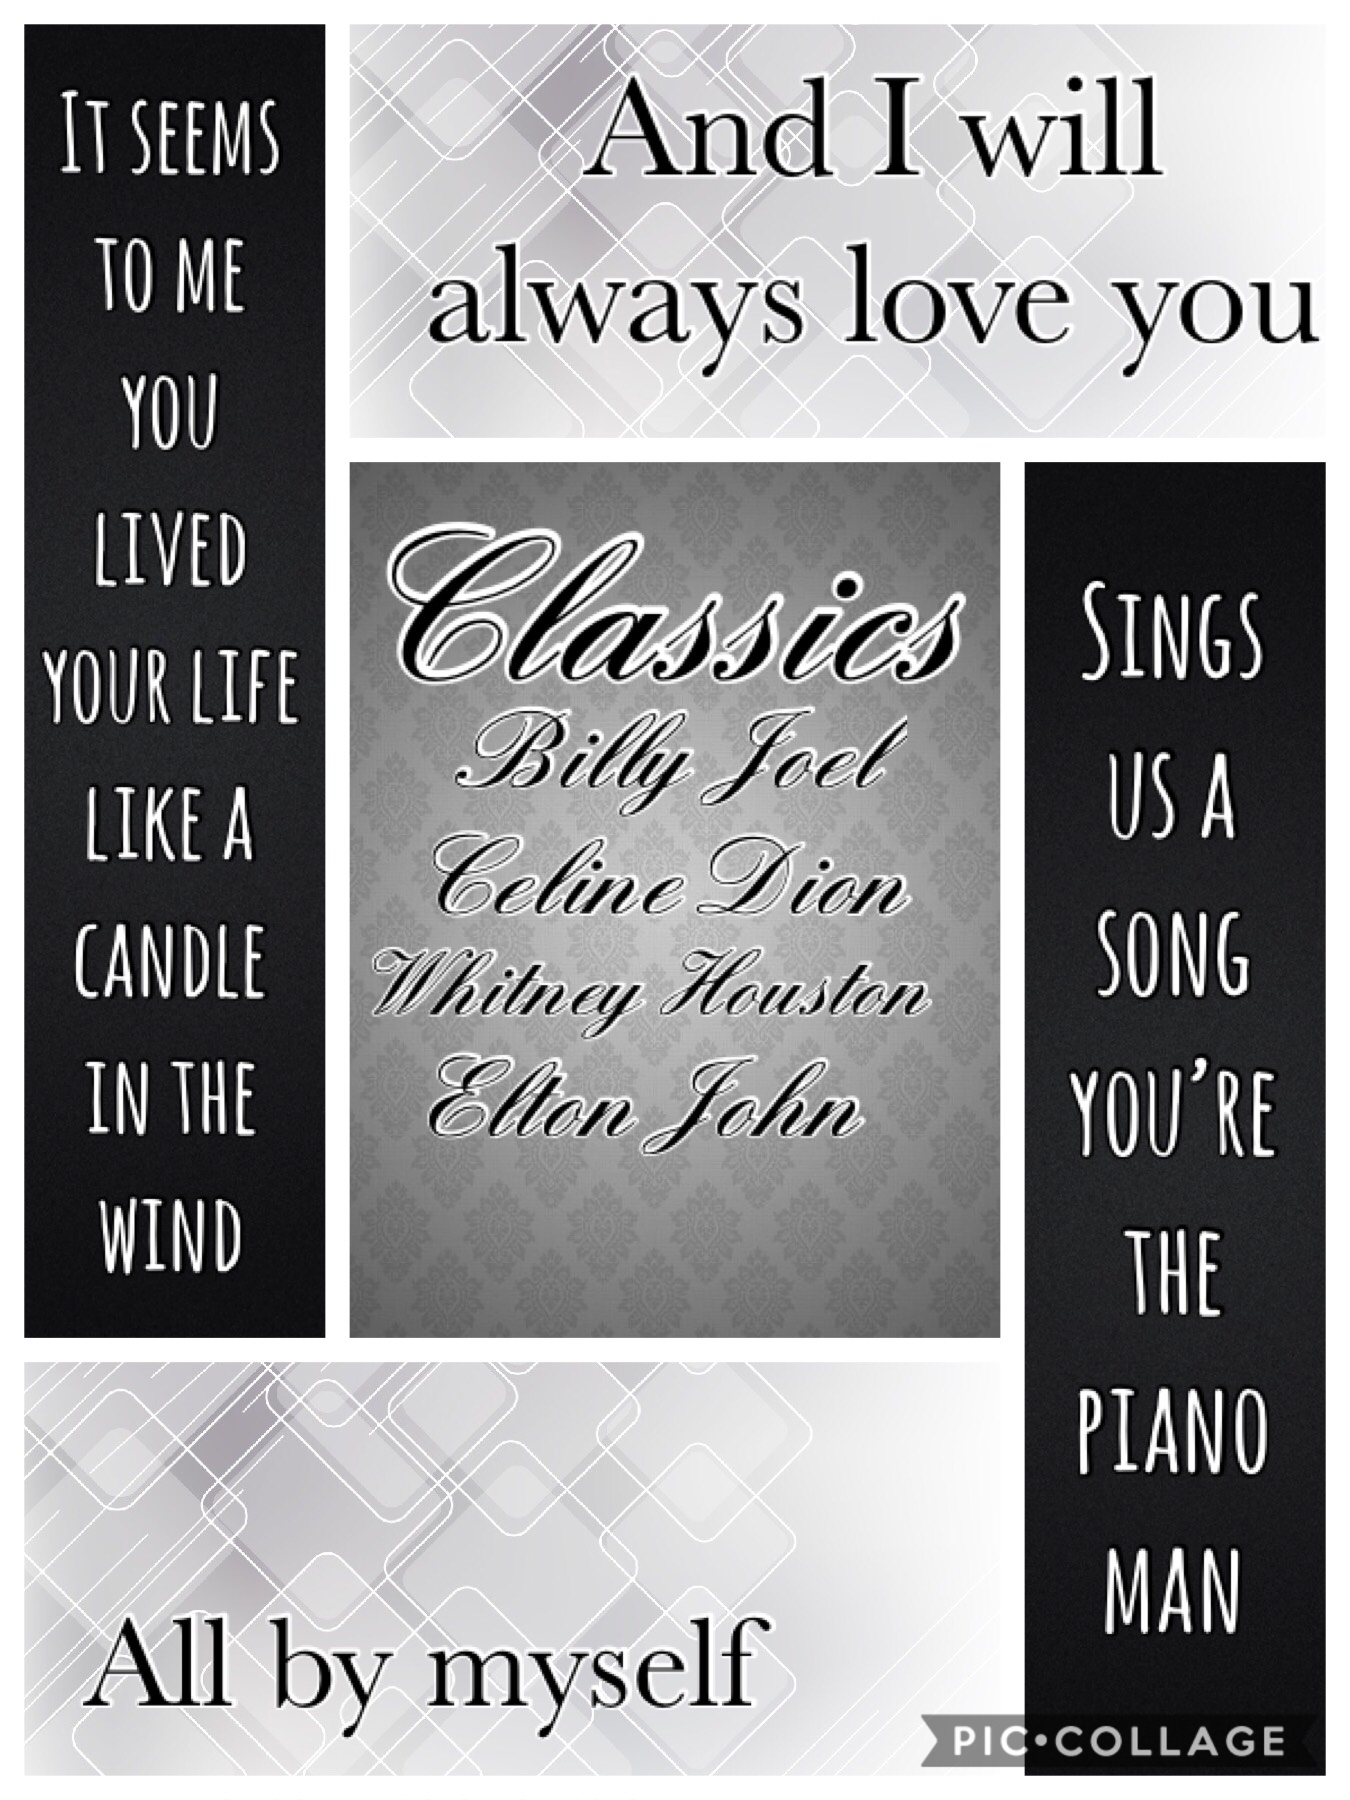 Classics by Whitney Houston Billy Joel Elton John and Celine Dion